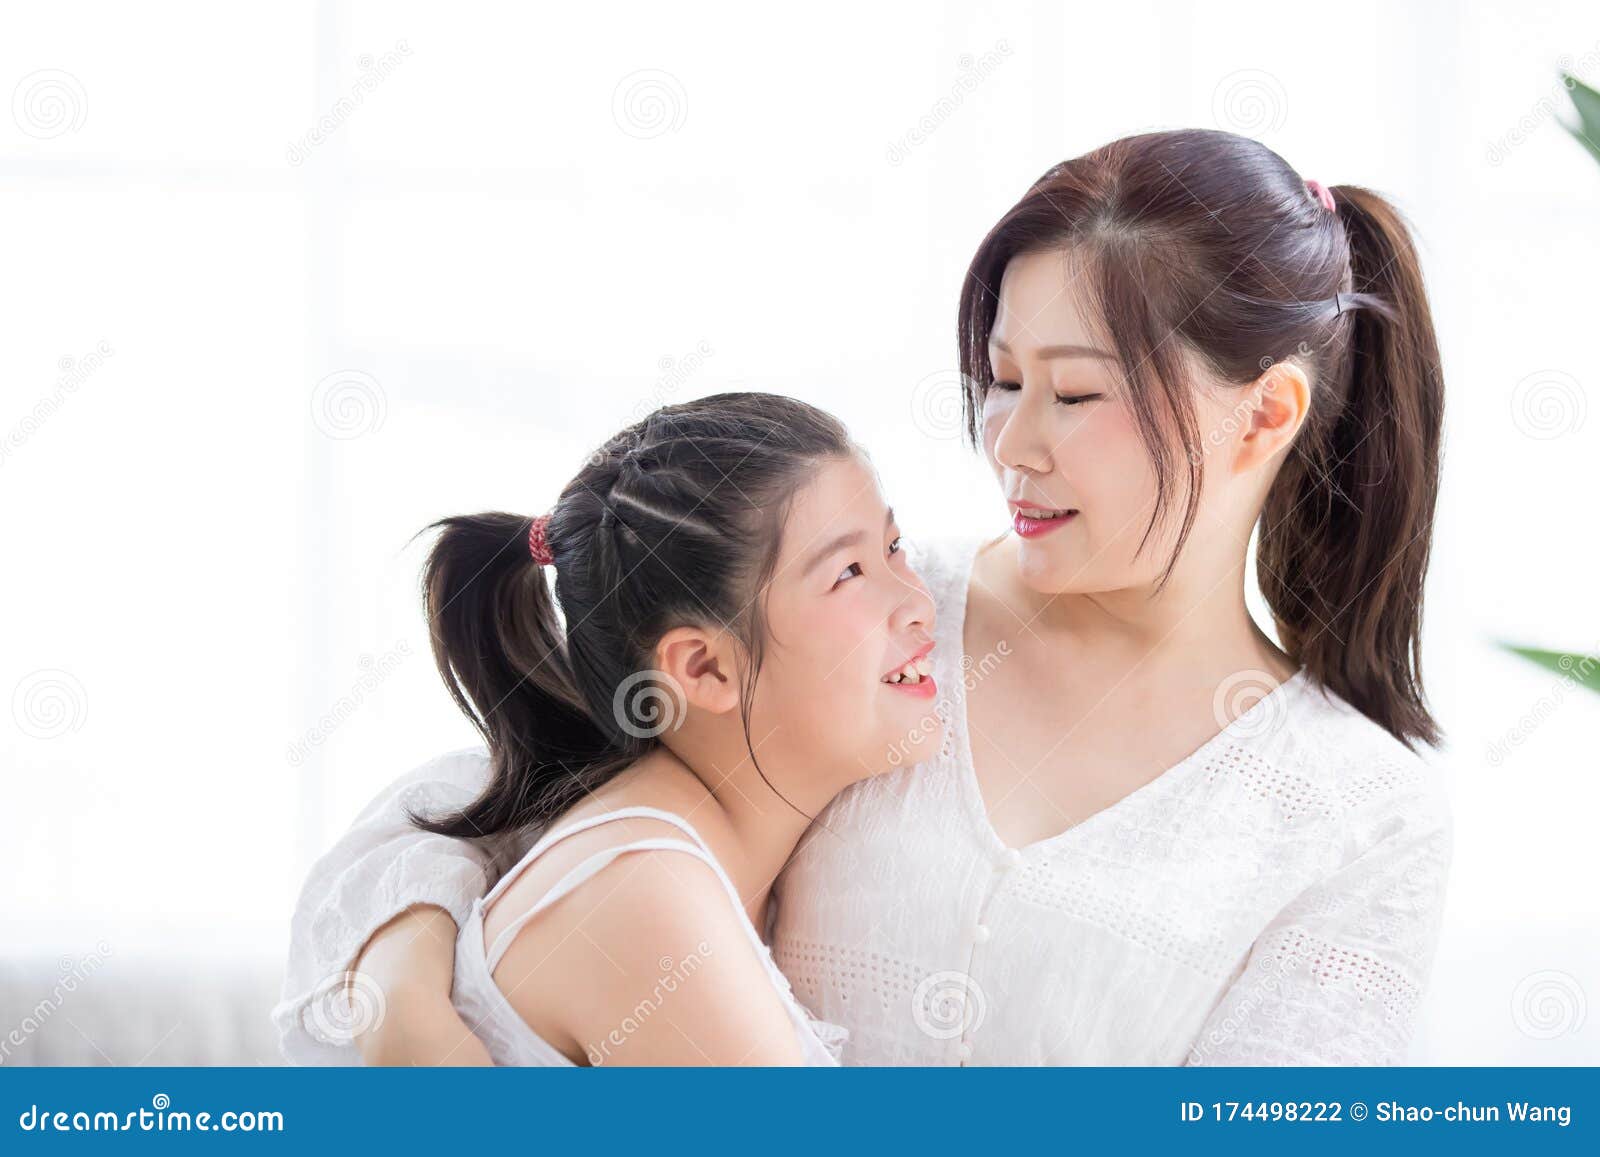 lesbian japanese mom daughter